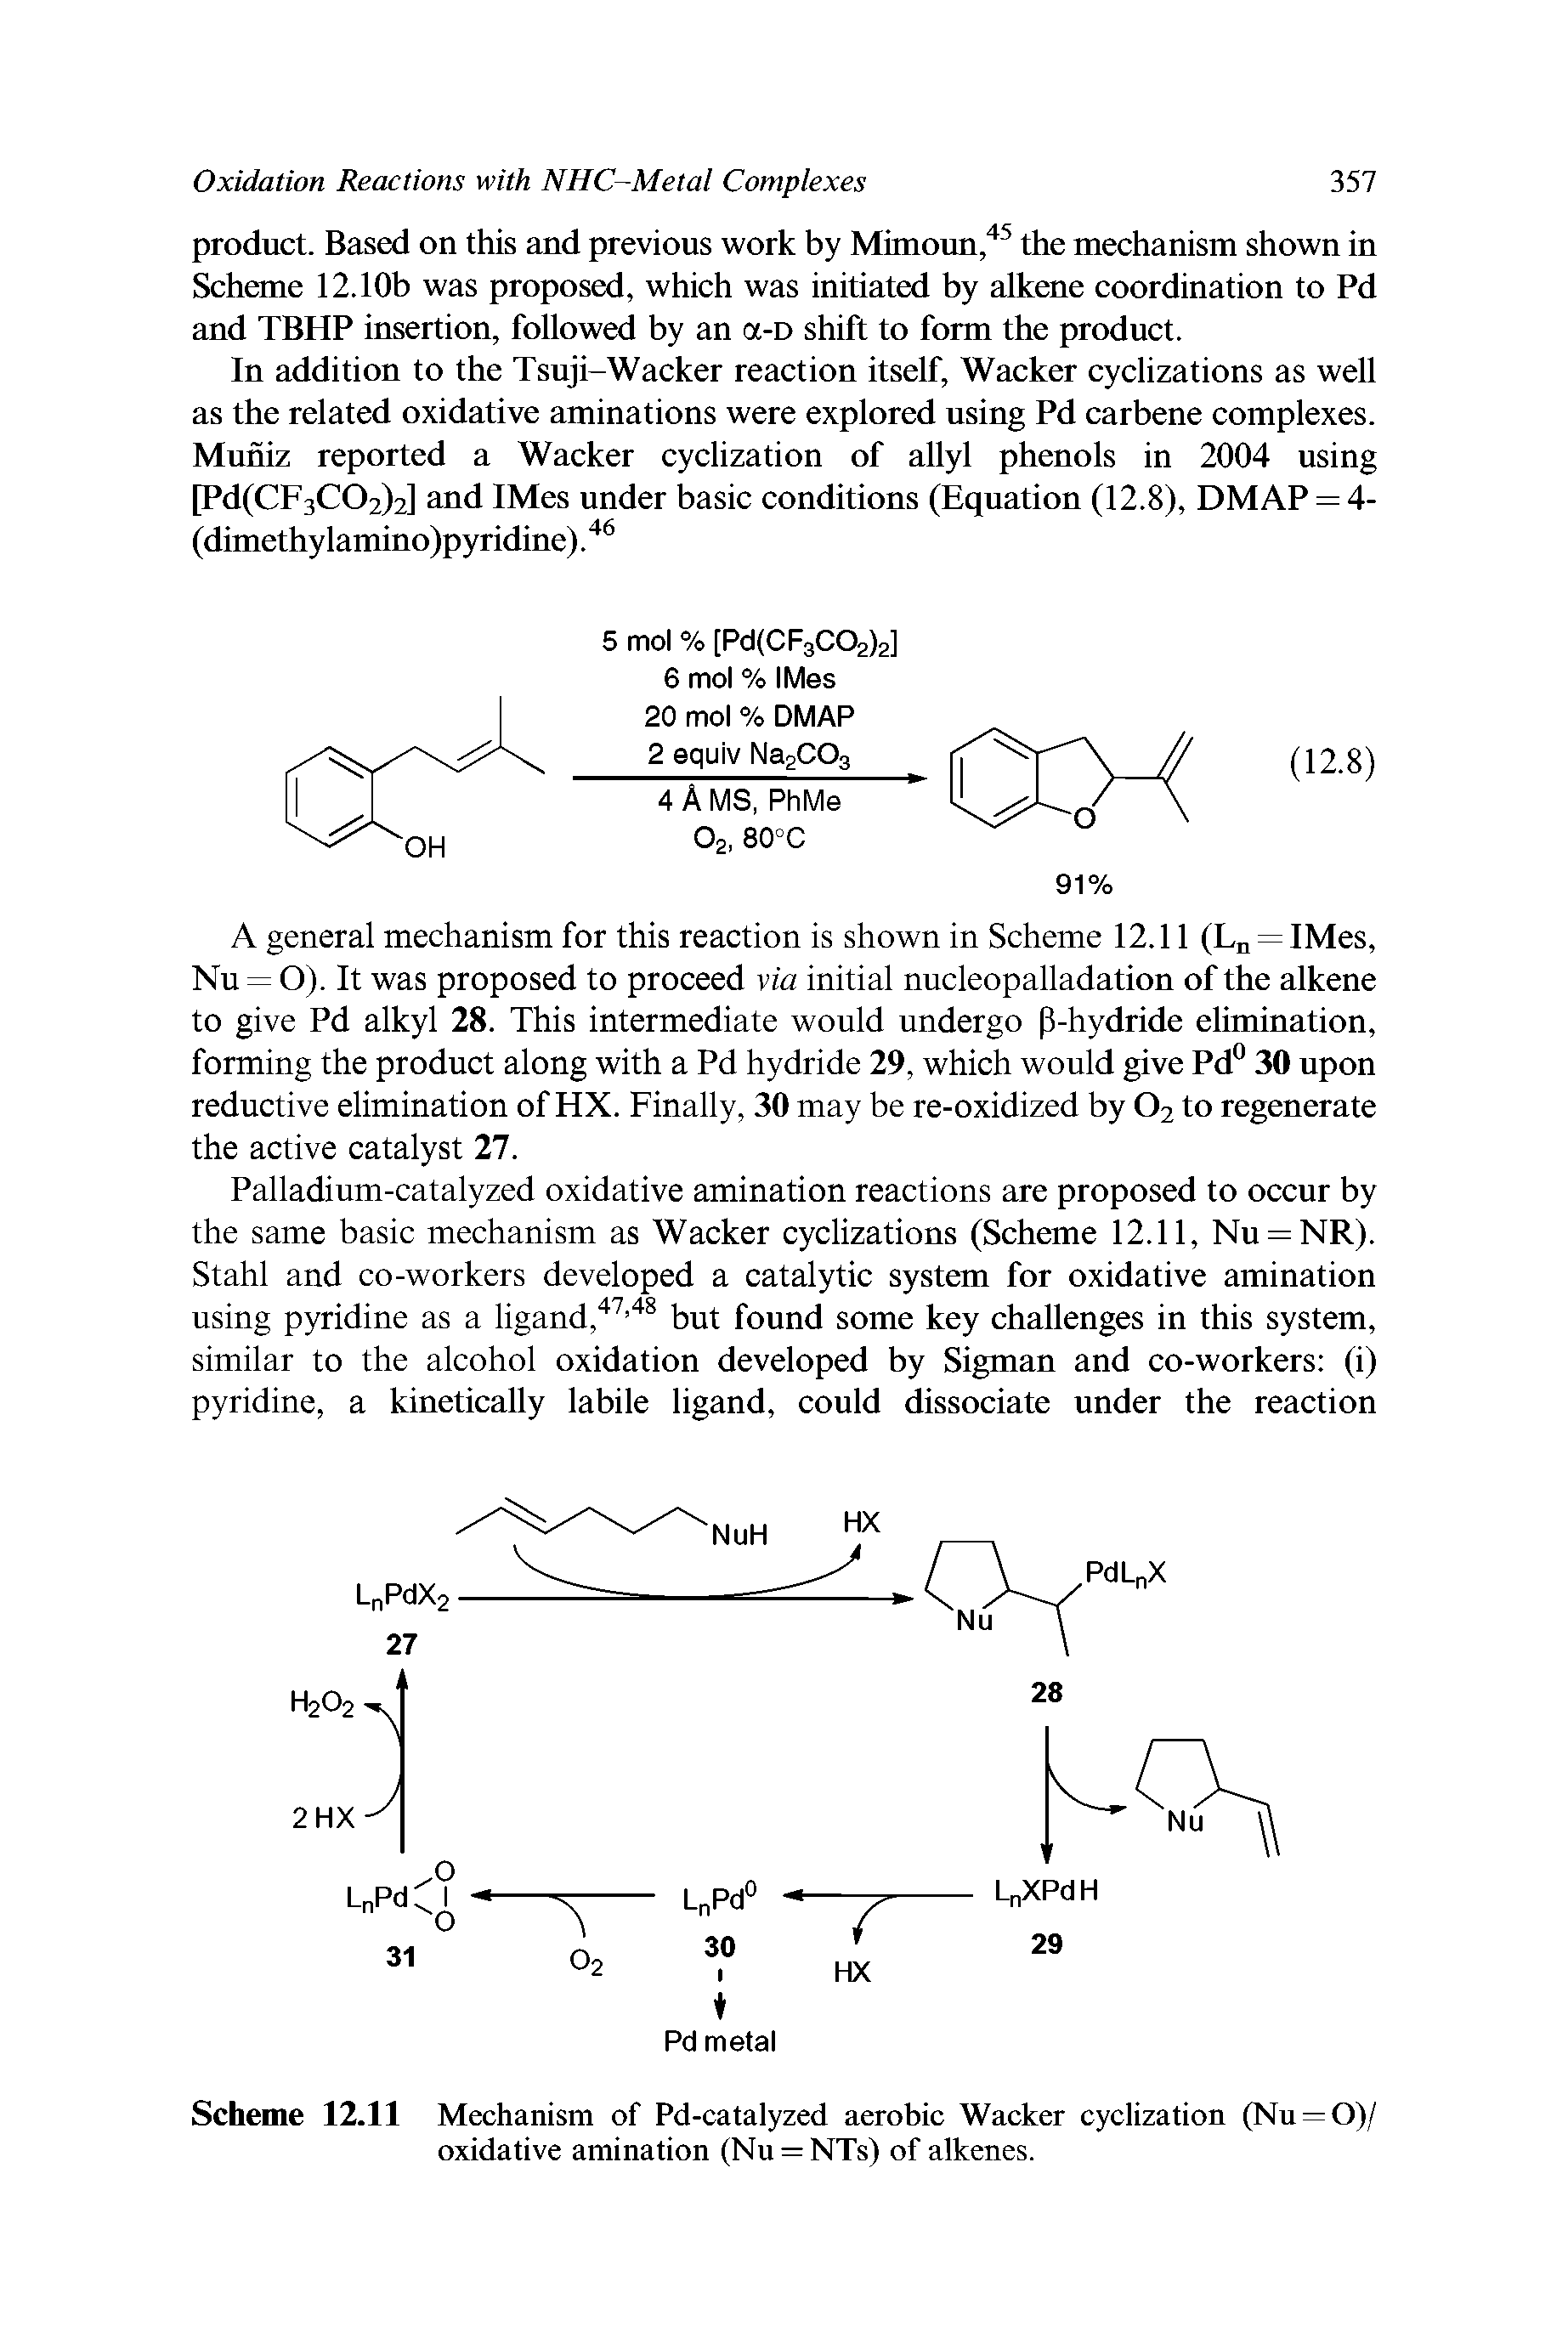 Scheme 12.11 Mechanism of Pd-catalyzed aerobic Waeker cyclization (Nu = 0)/ oxidative amination (Nu = NTs) of alkenes.